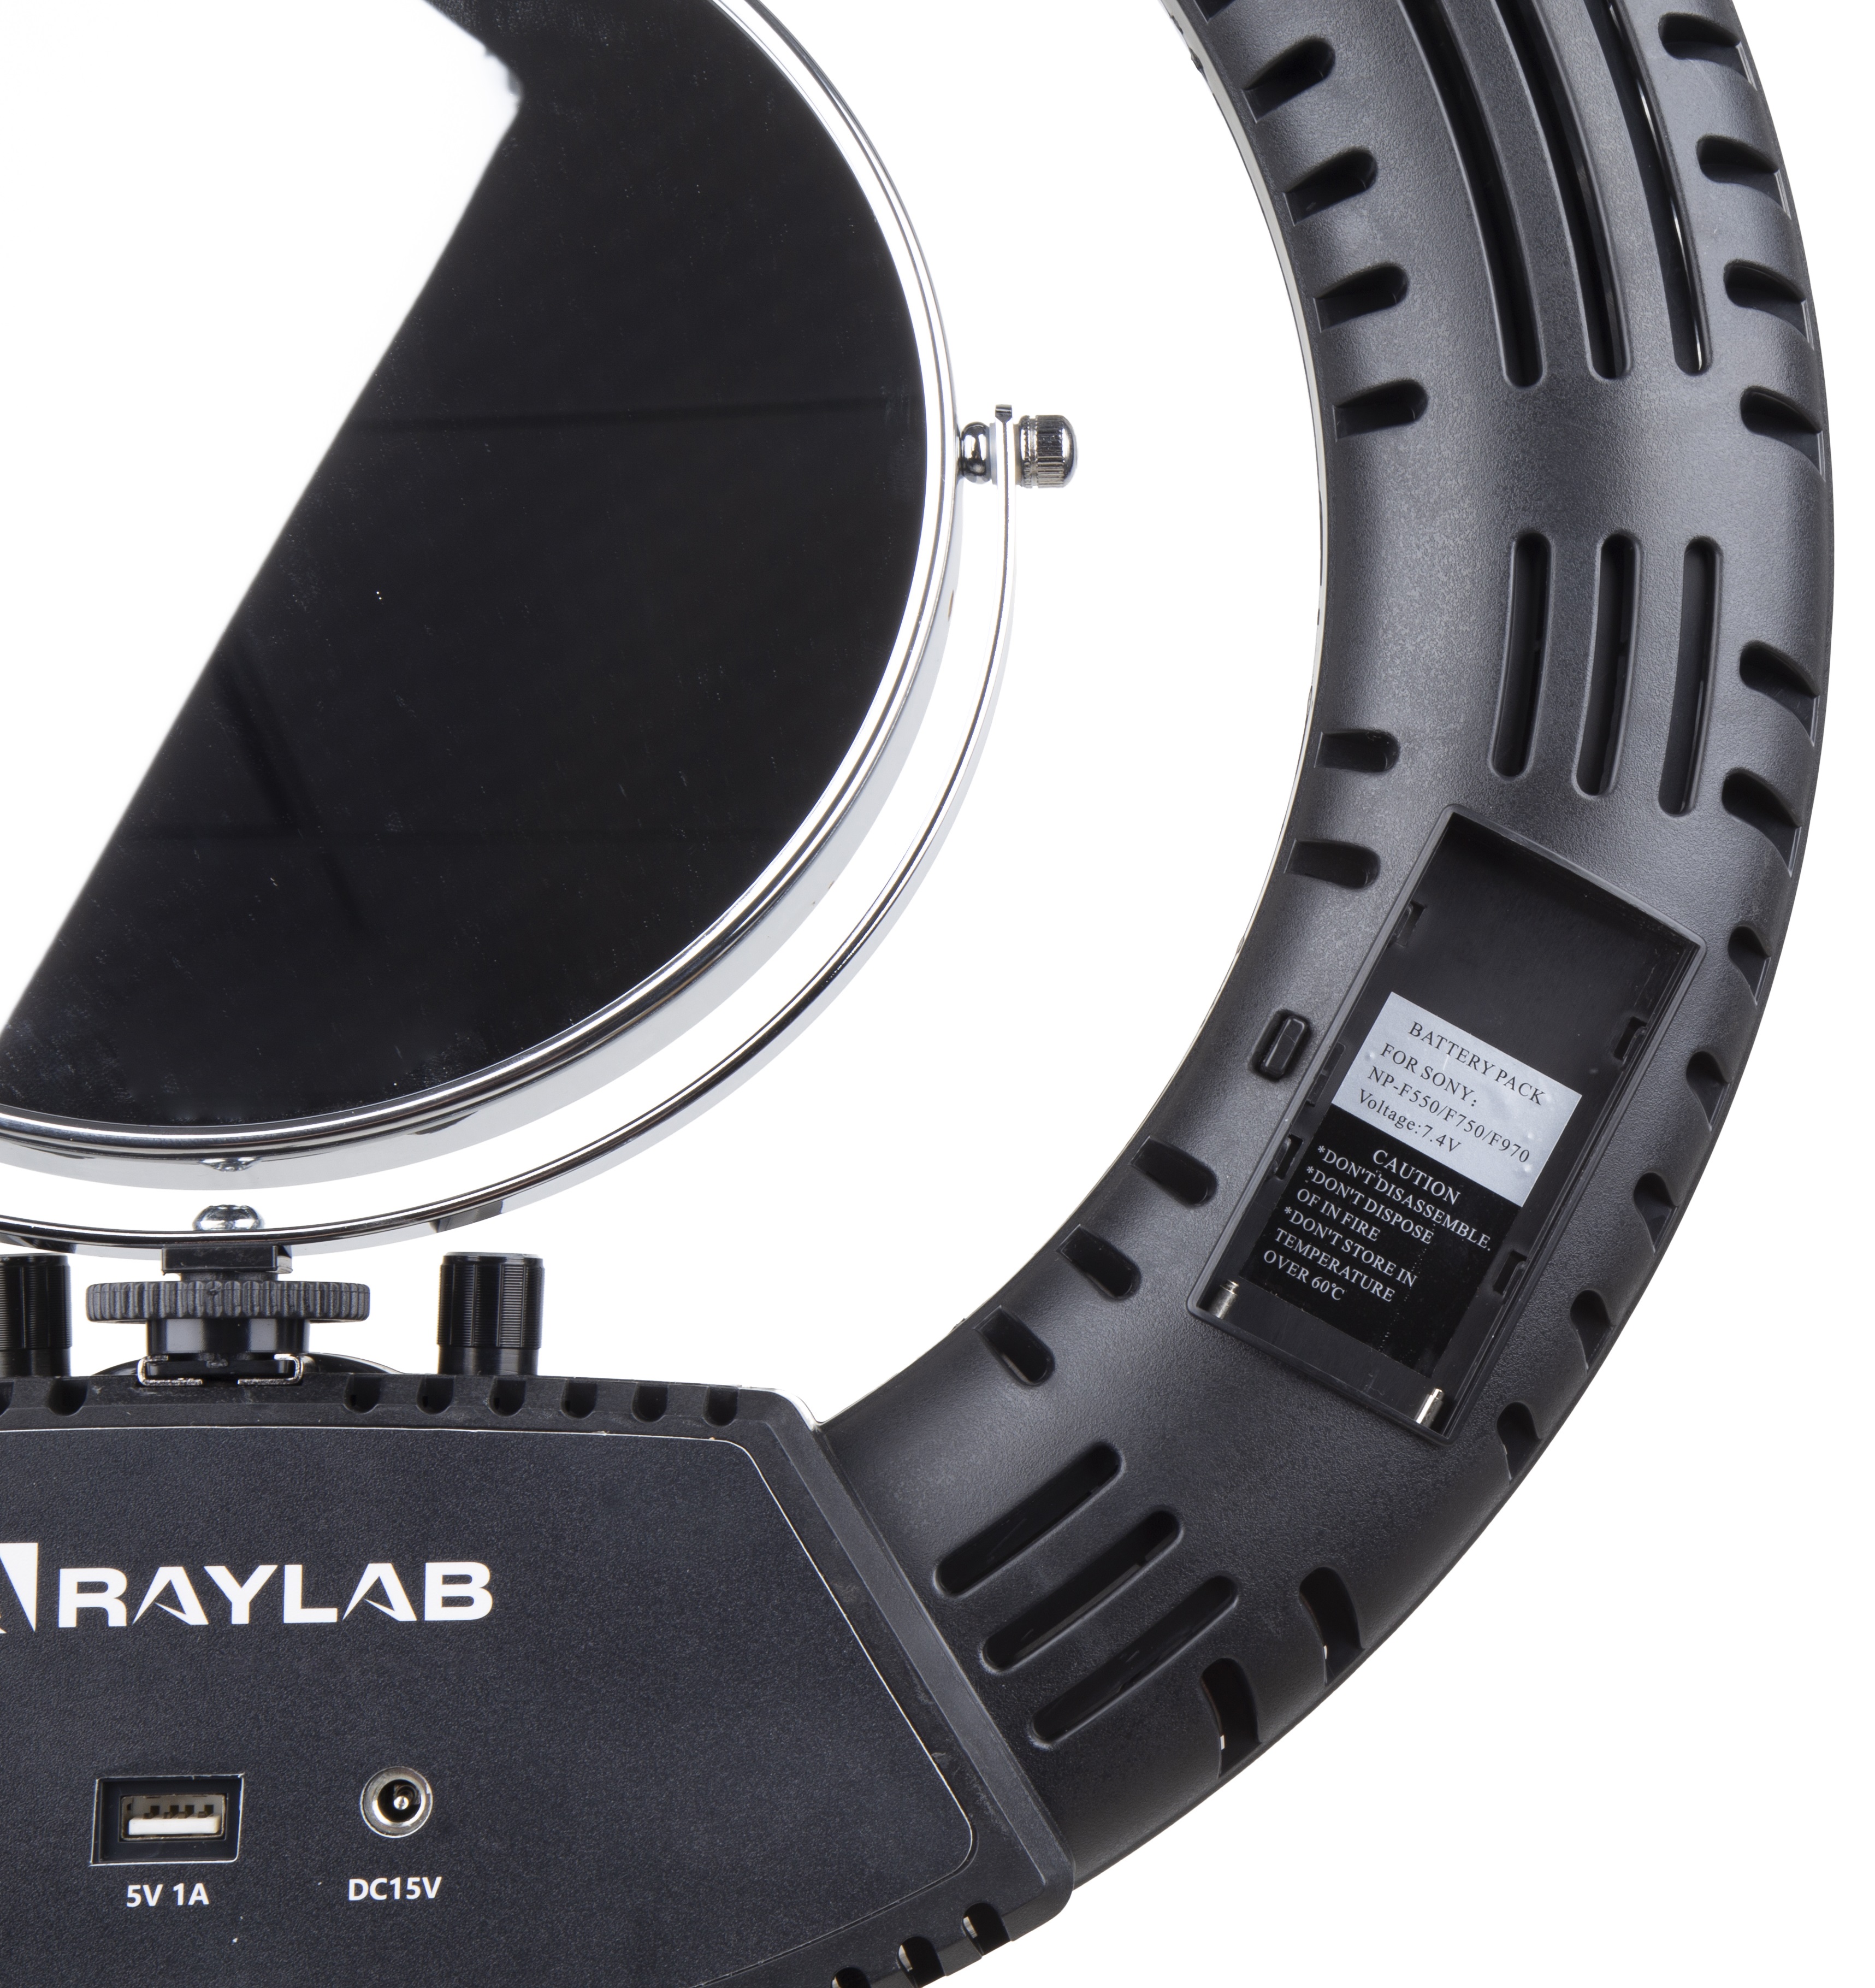    Raylab RL-0418 Kit    Ultra-mart